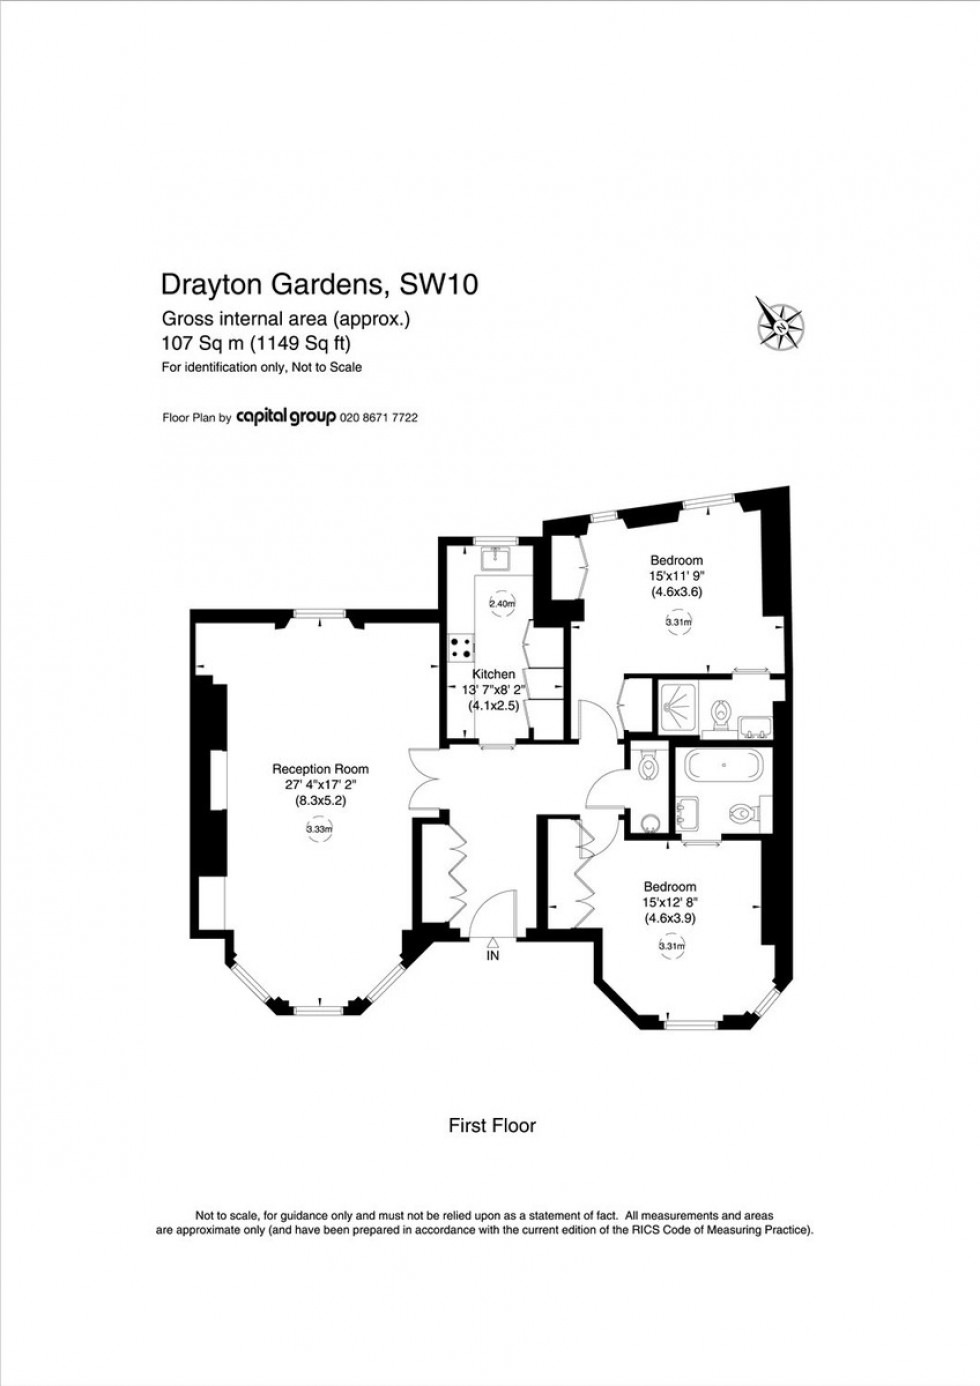 Floorplan for Drayton Gardens, London, SW10